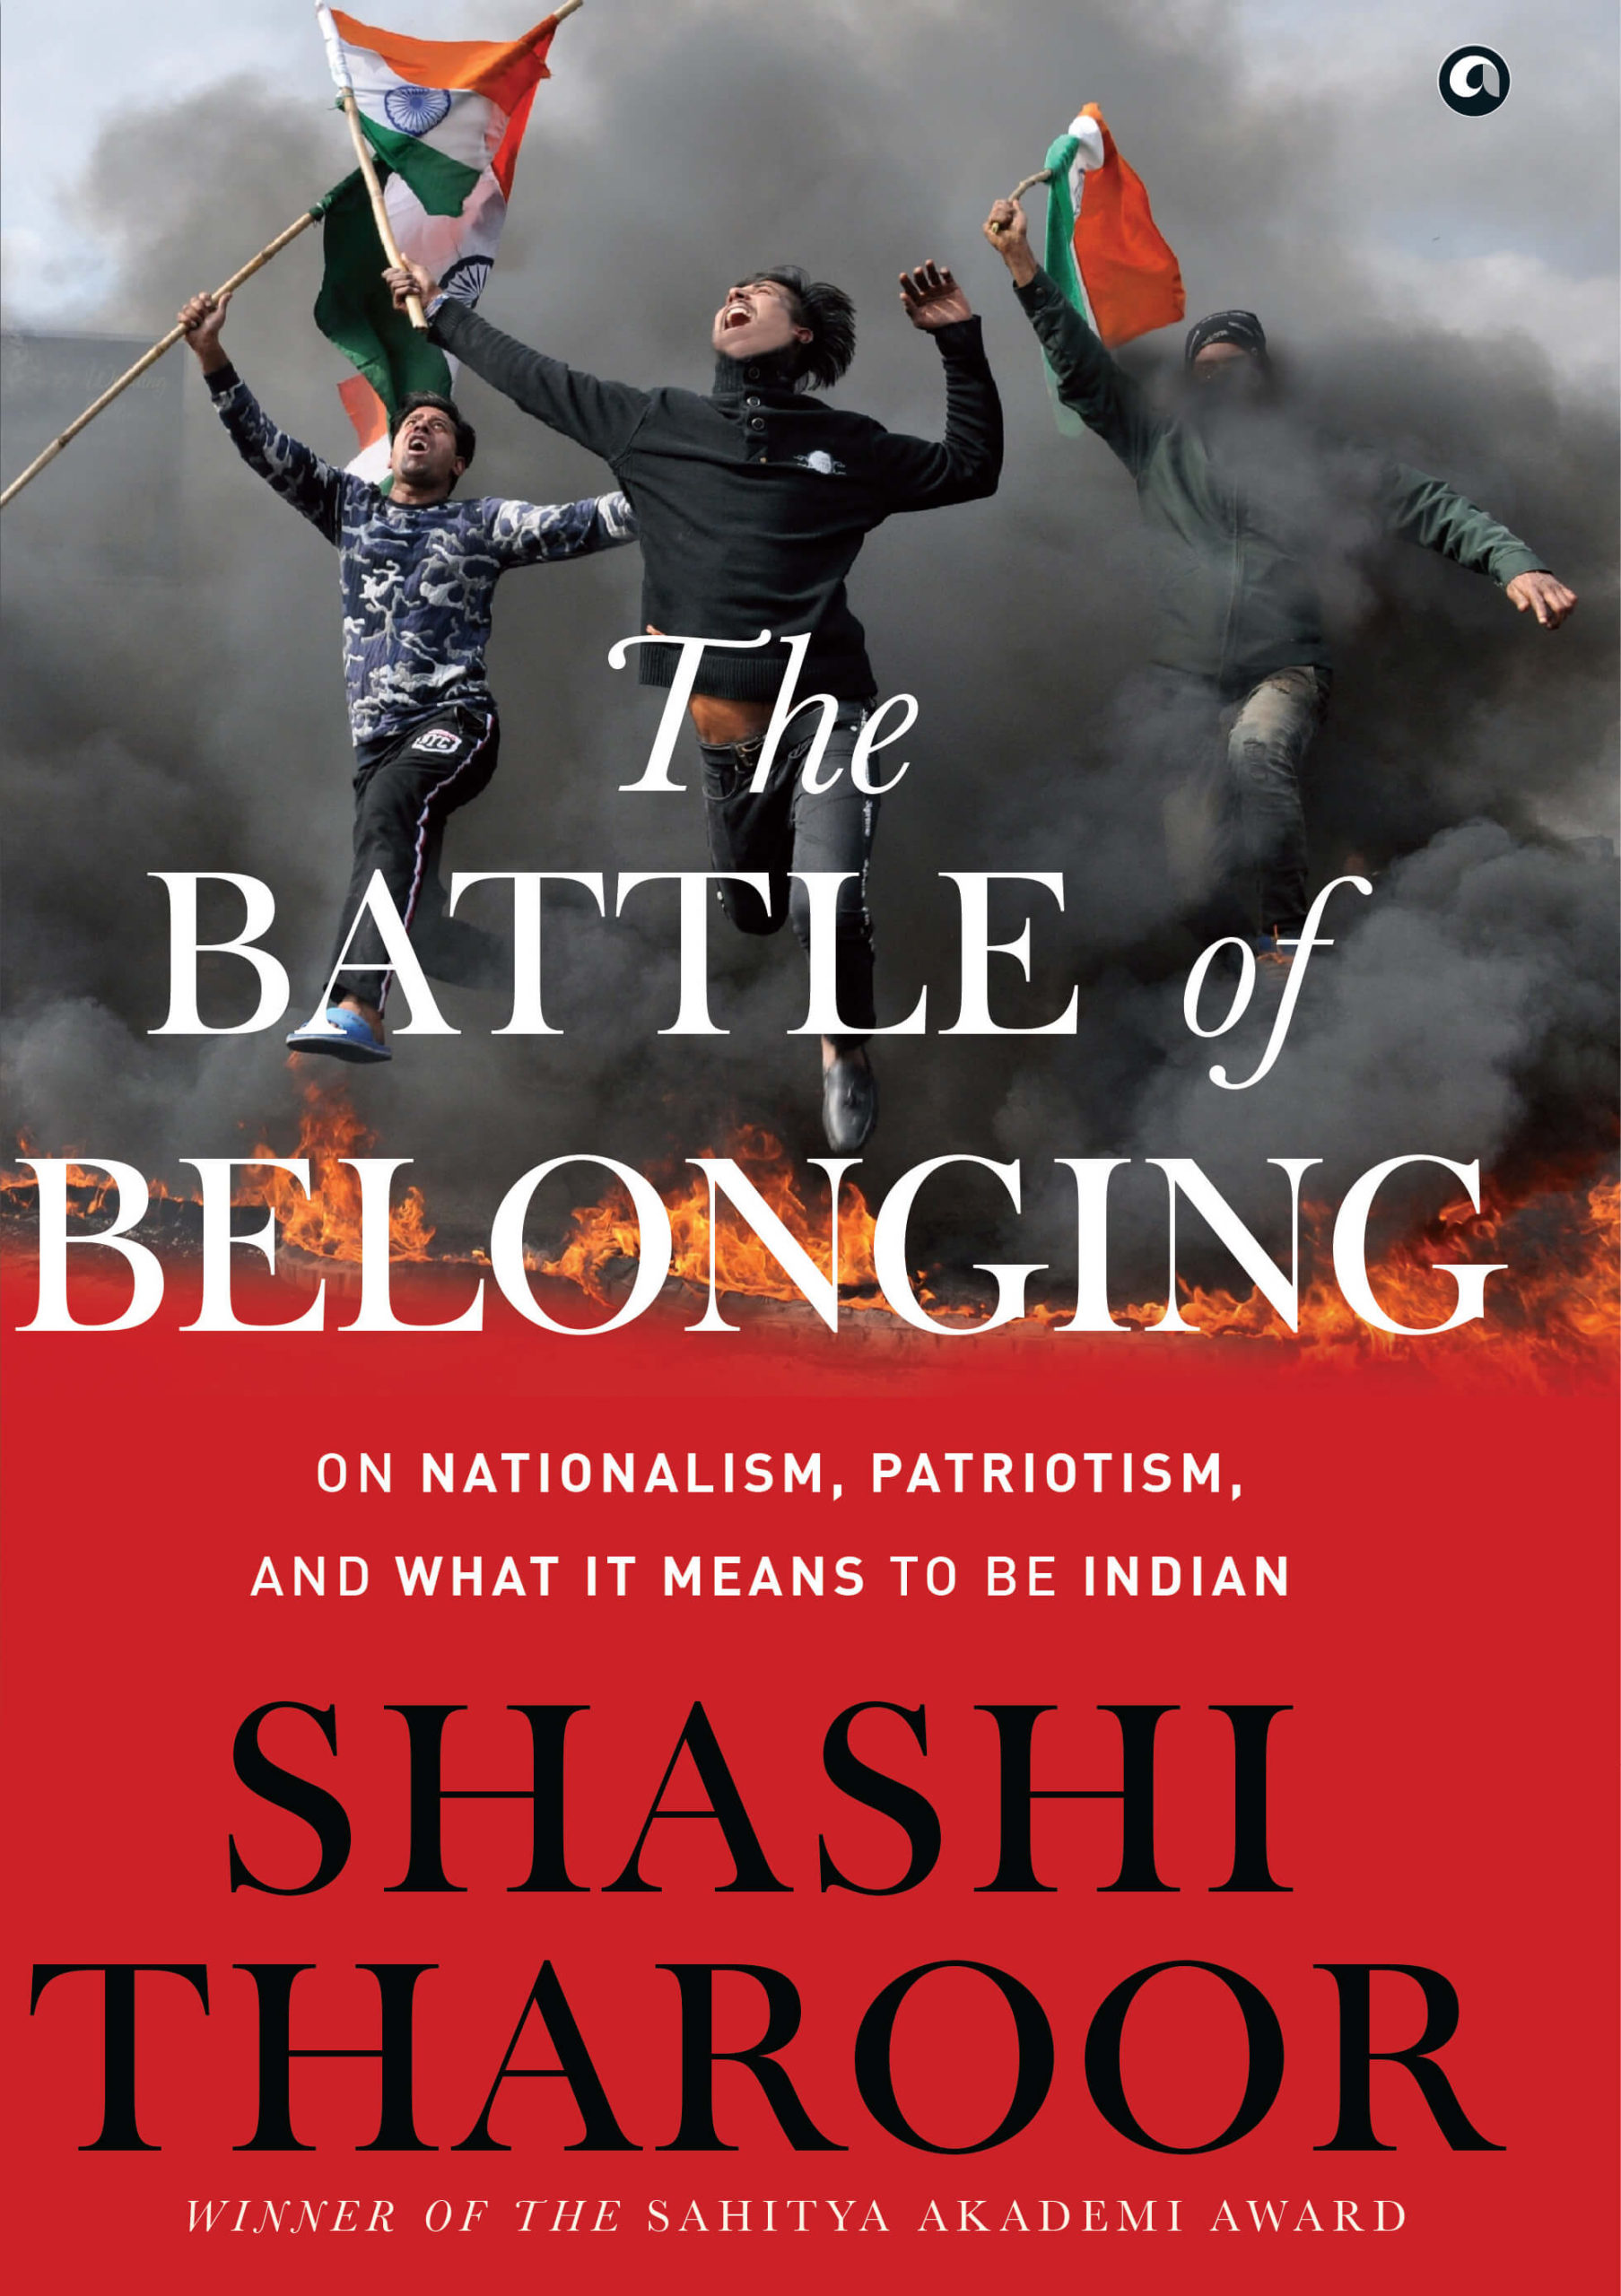 ../../../_images/Tharoor-Shashi--The-Battle-of-Belonging.jpg